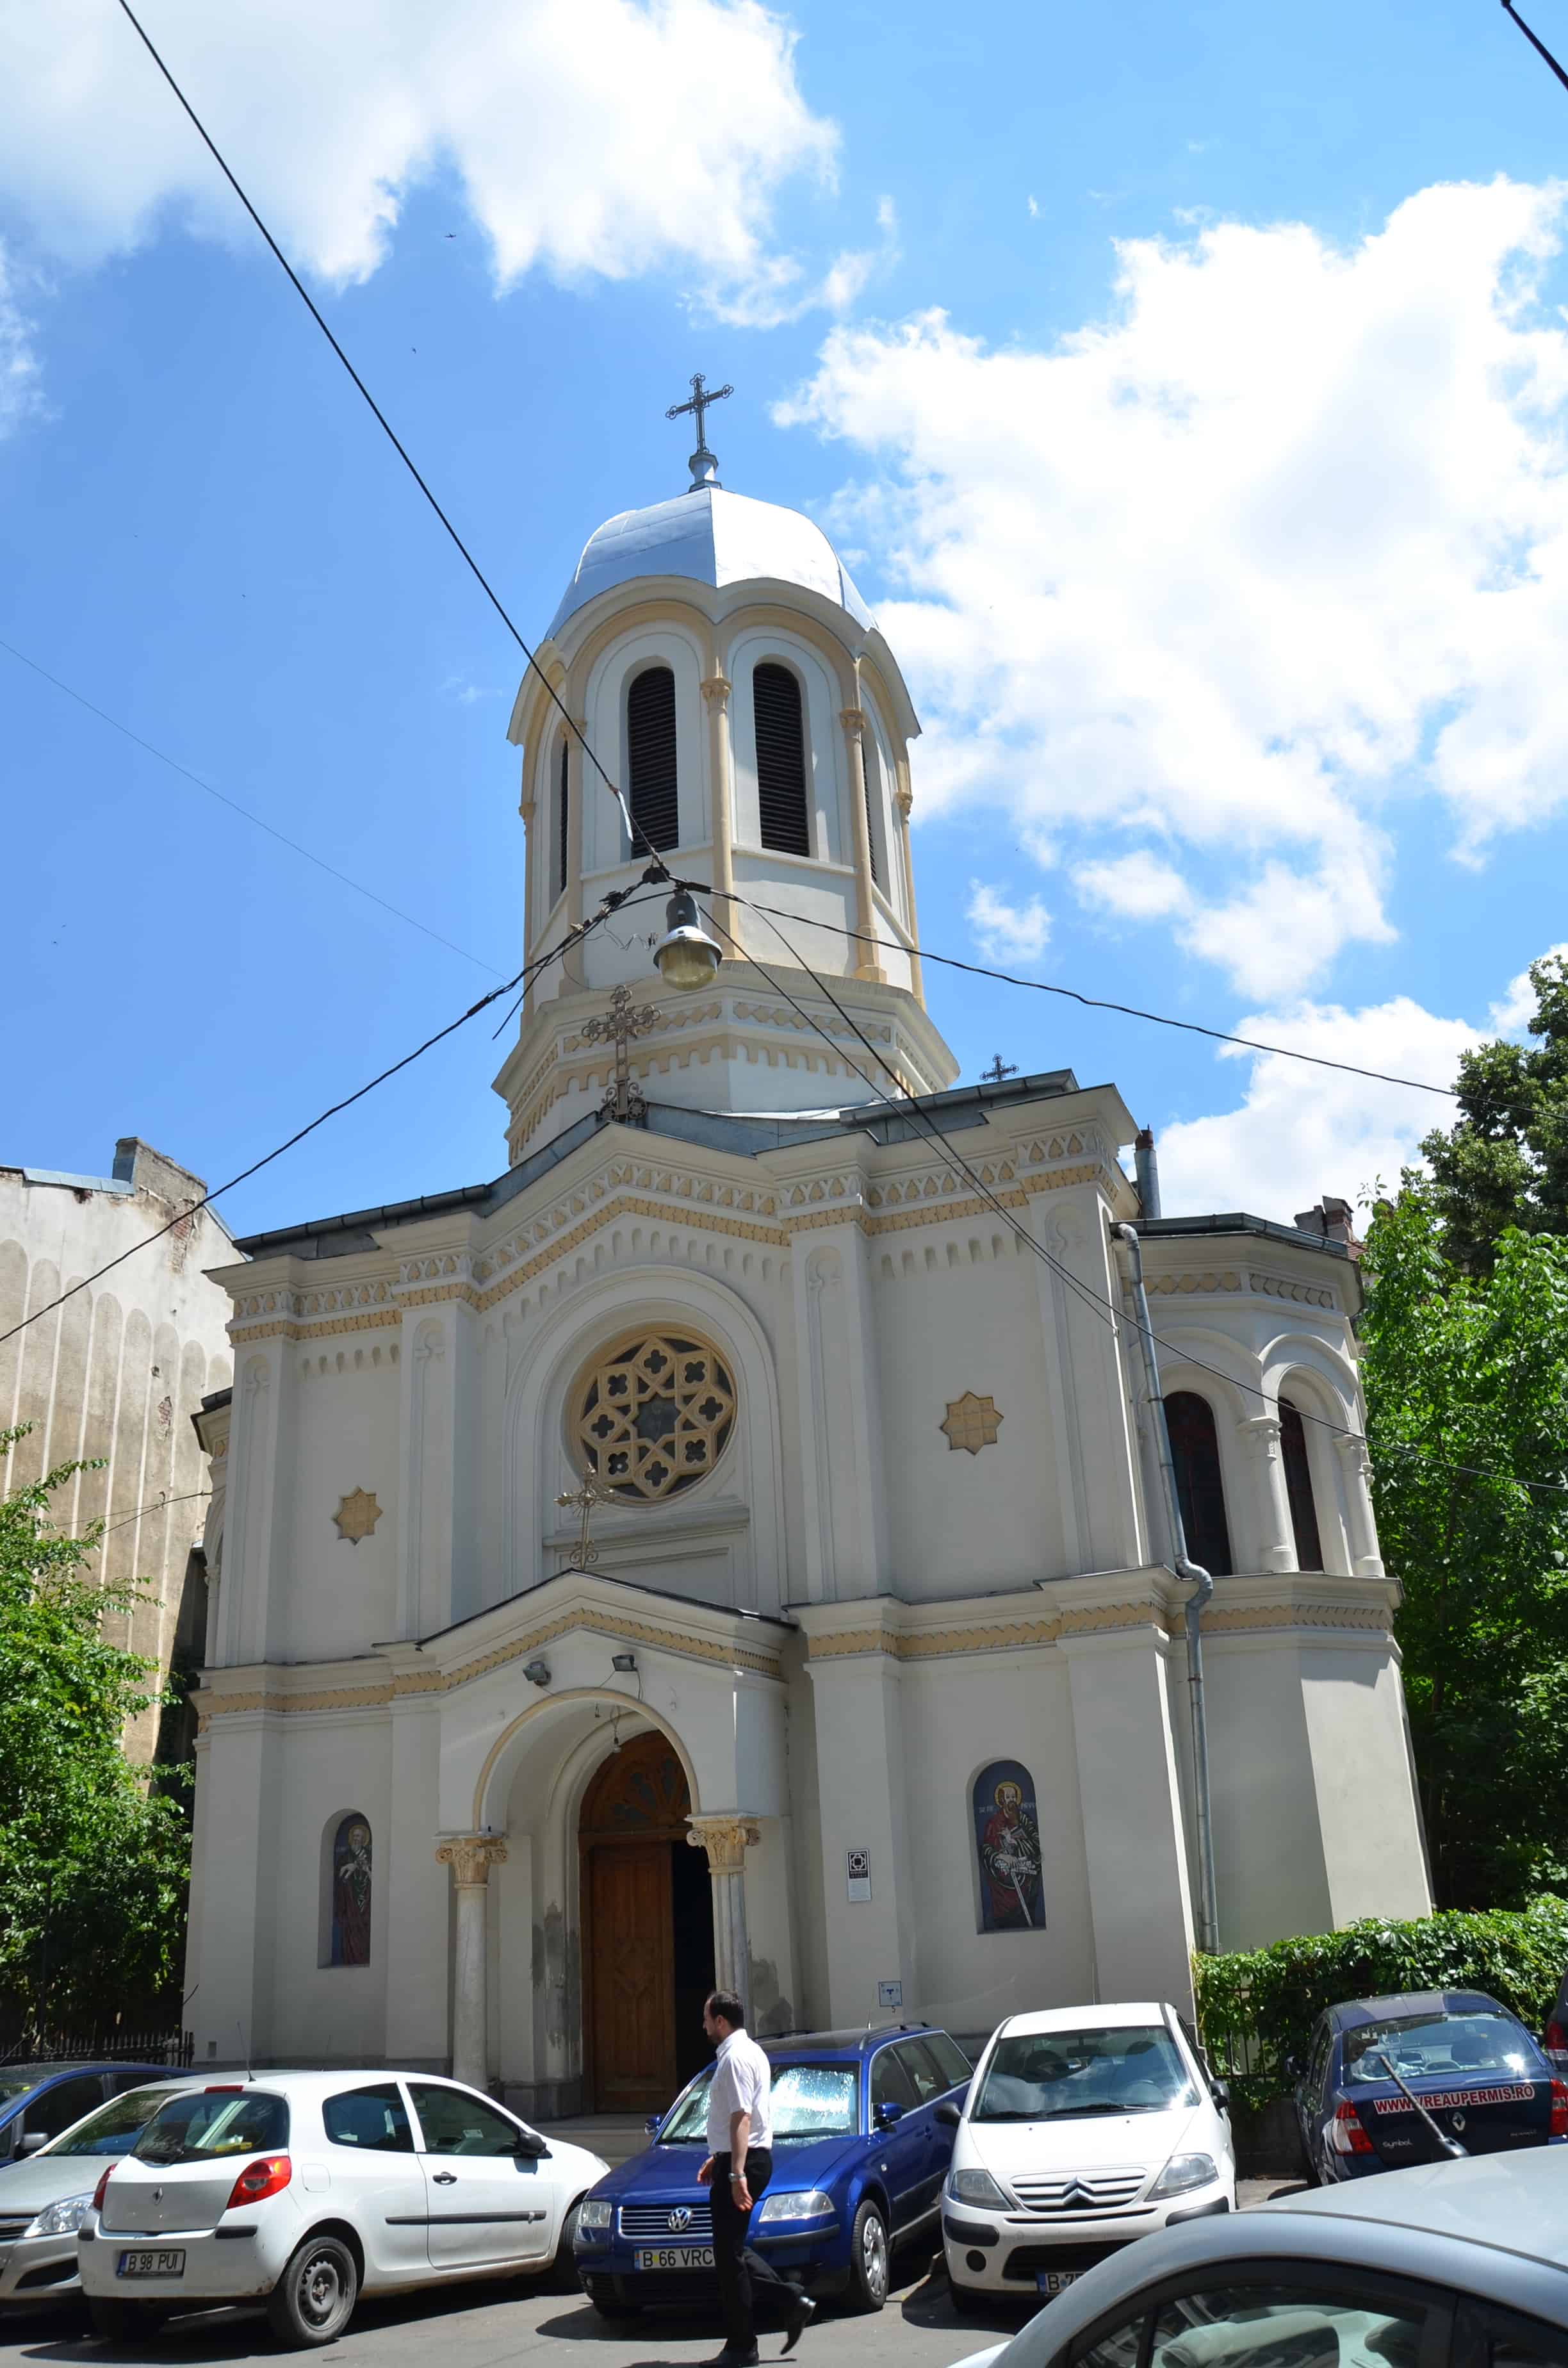 Biserica Sfântul Nicolae in Bucharest, Romania